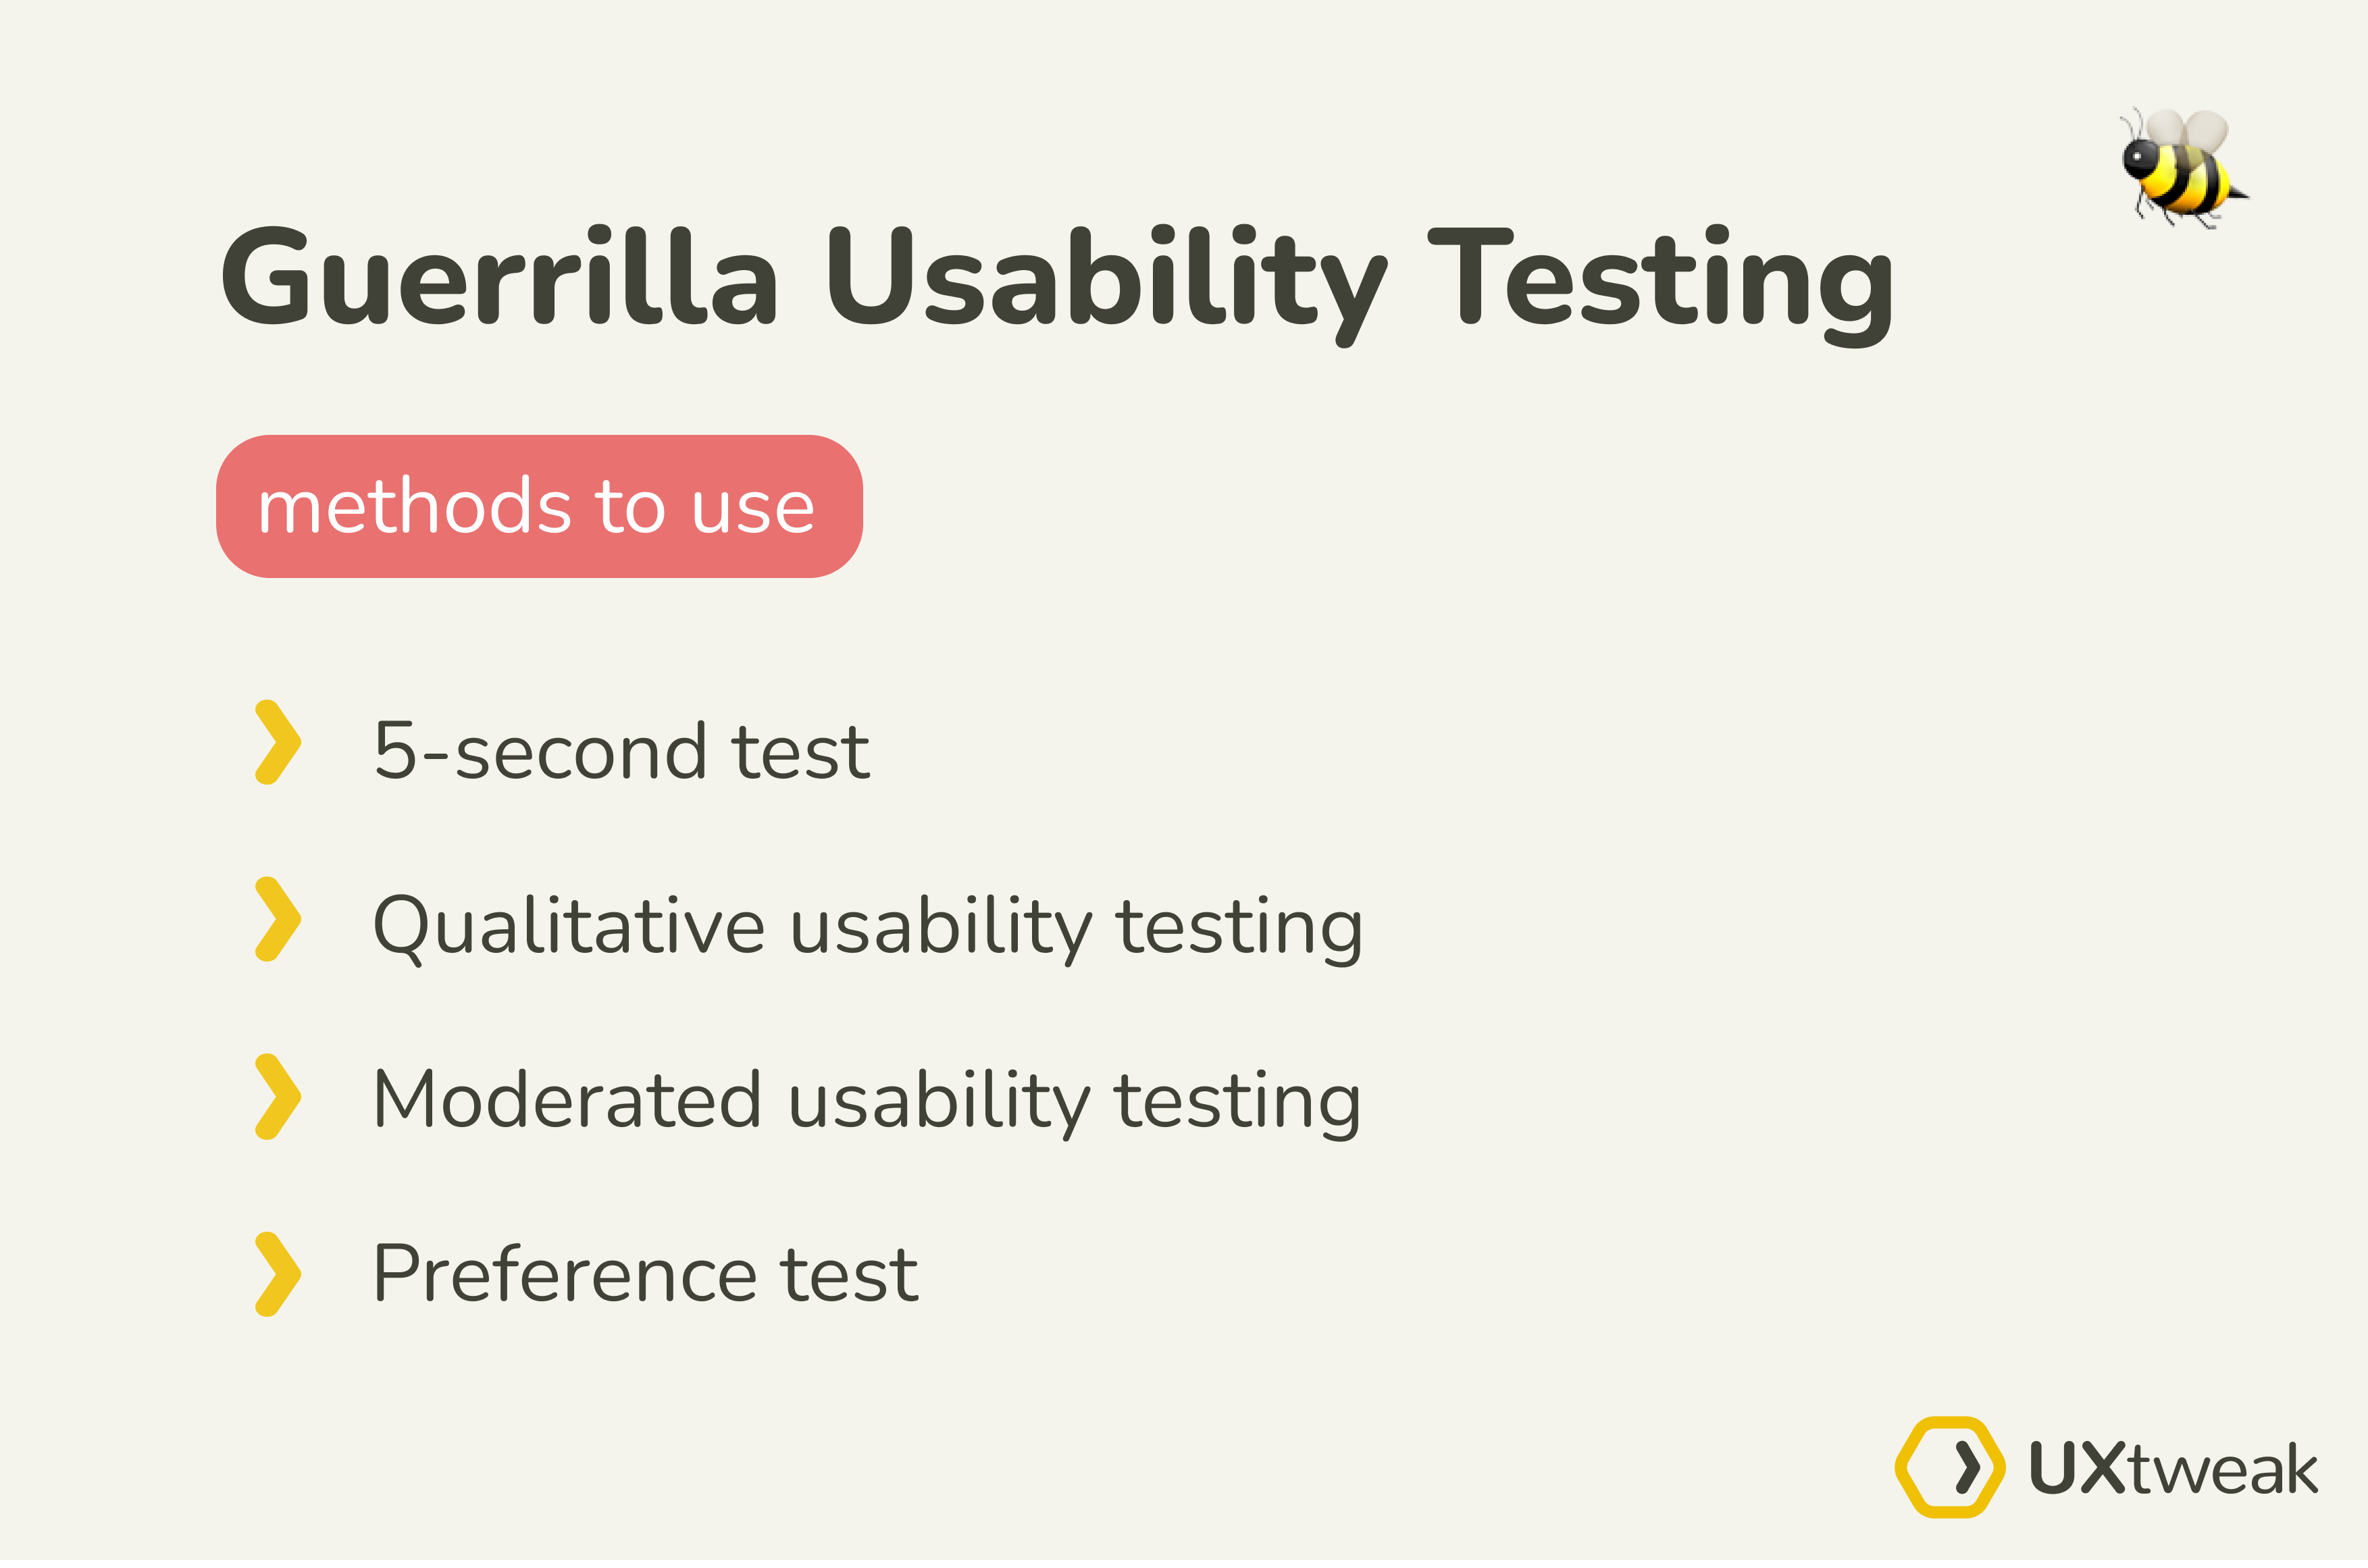 guerrilla usability testing methods